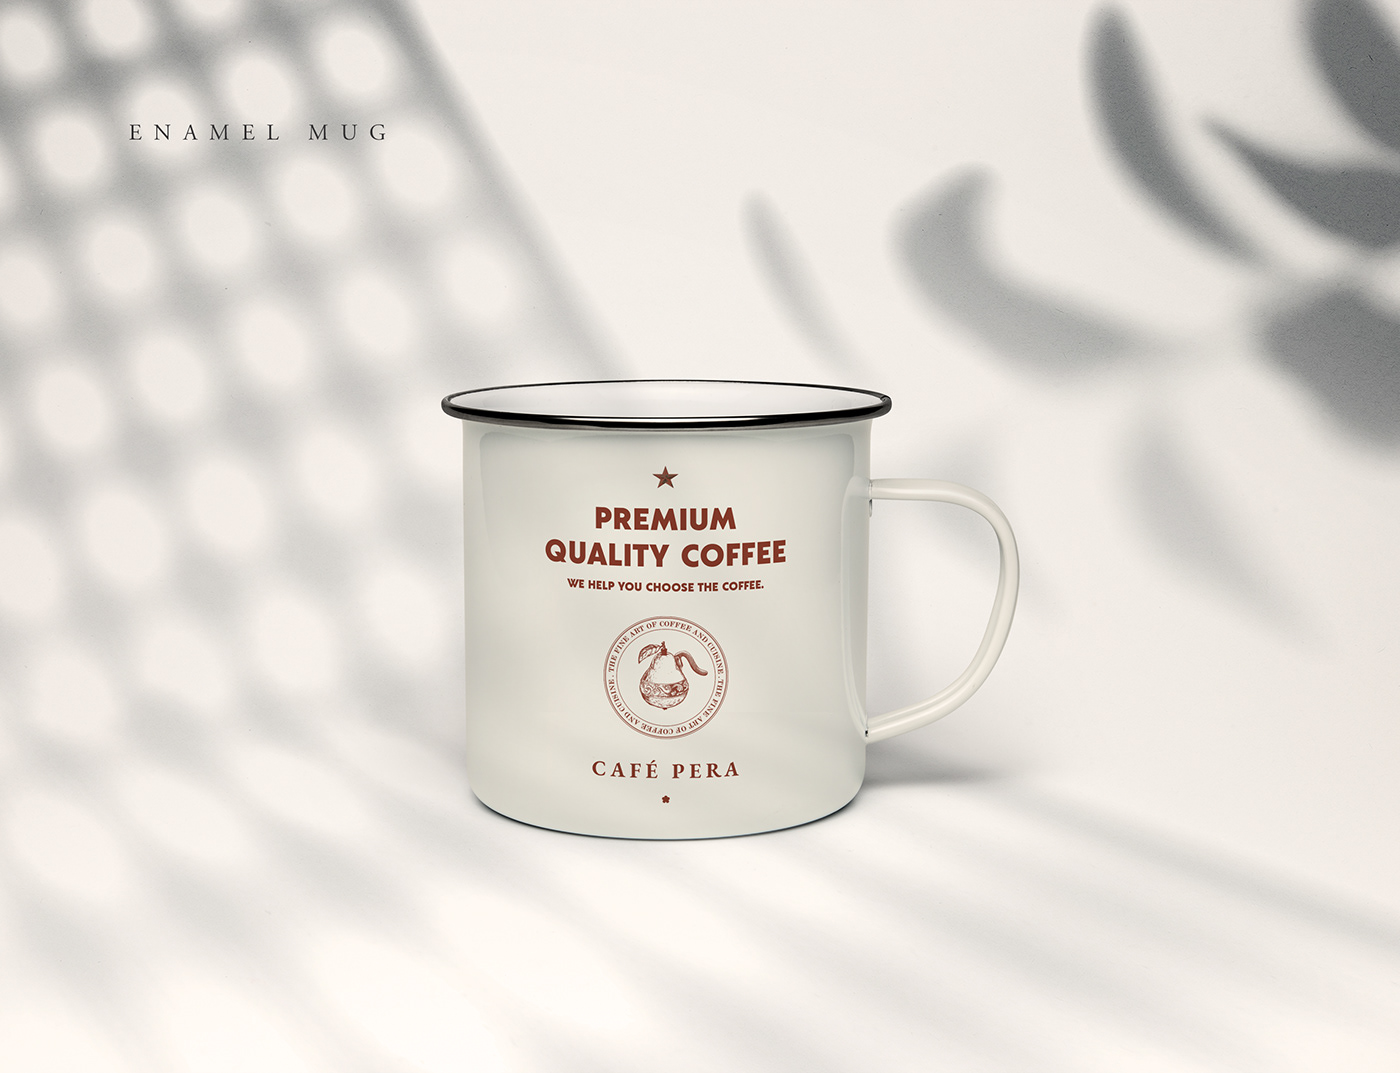 enamel mug
mug
cup
coffee
premium
ceramic
clay
aluminum
iron cup
drink coffee